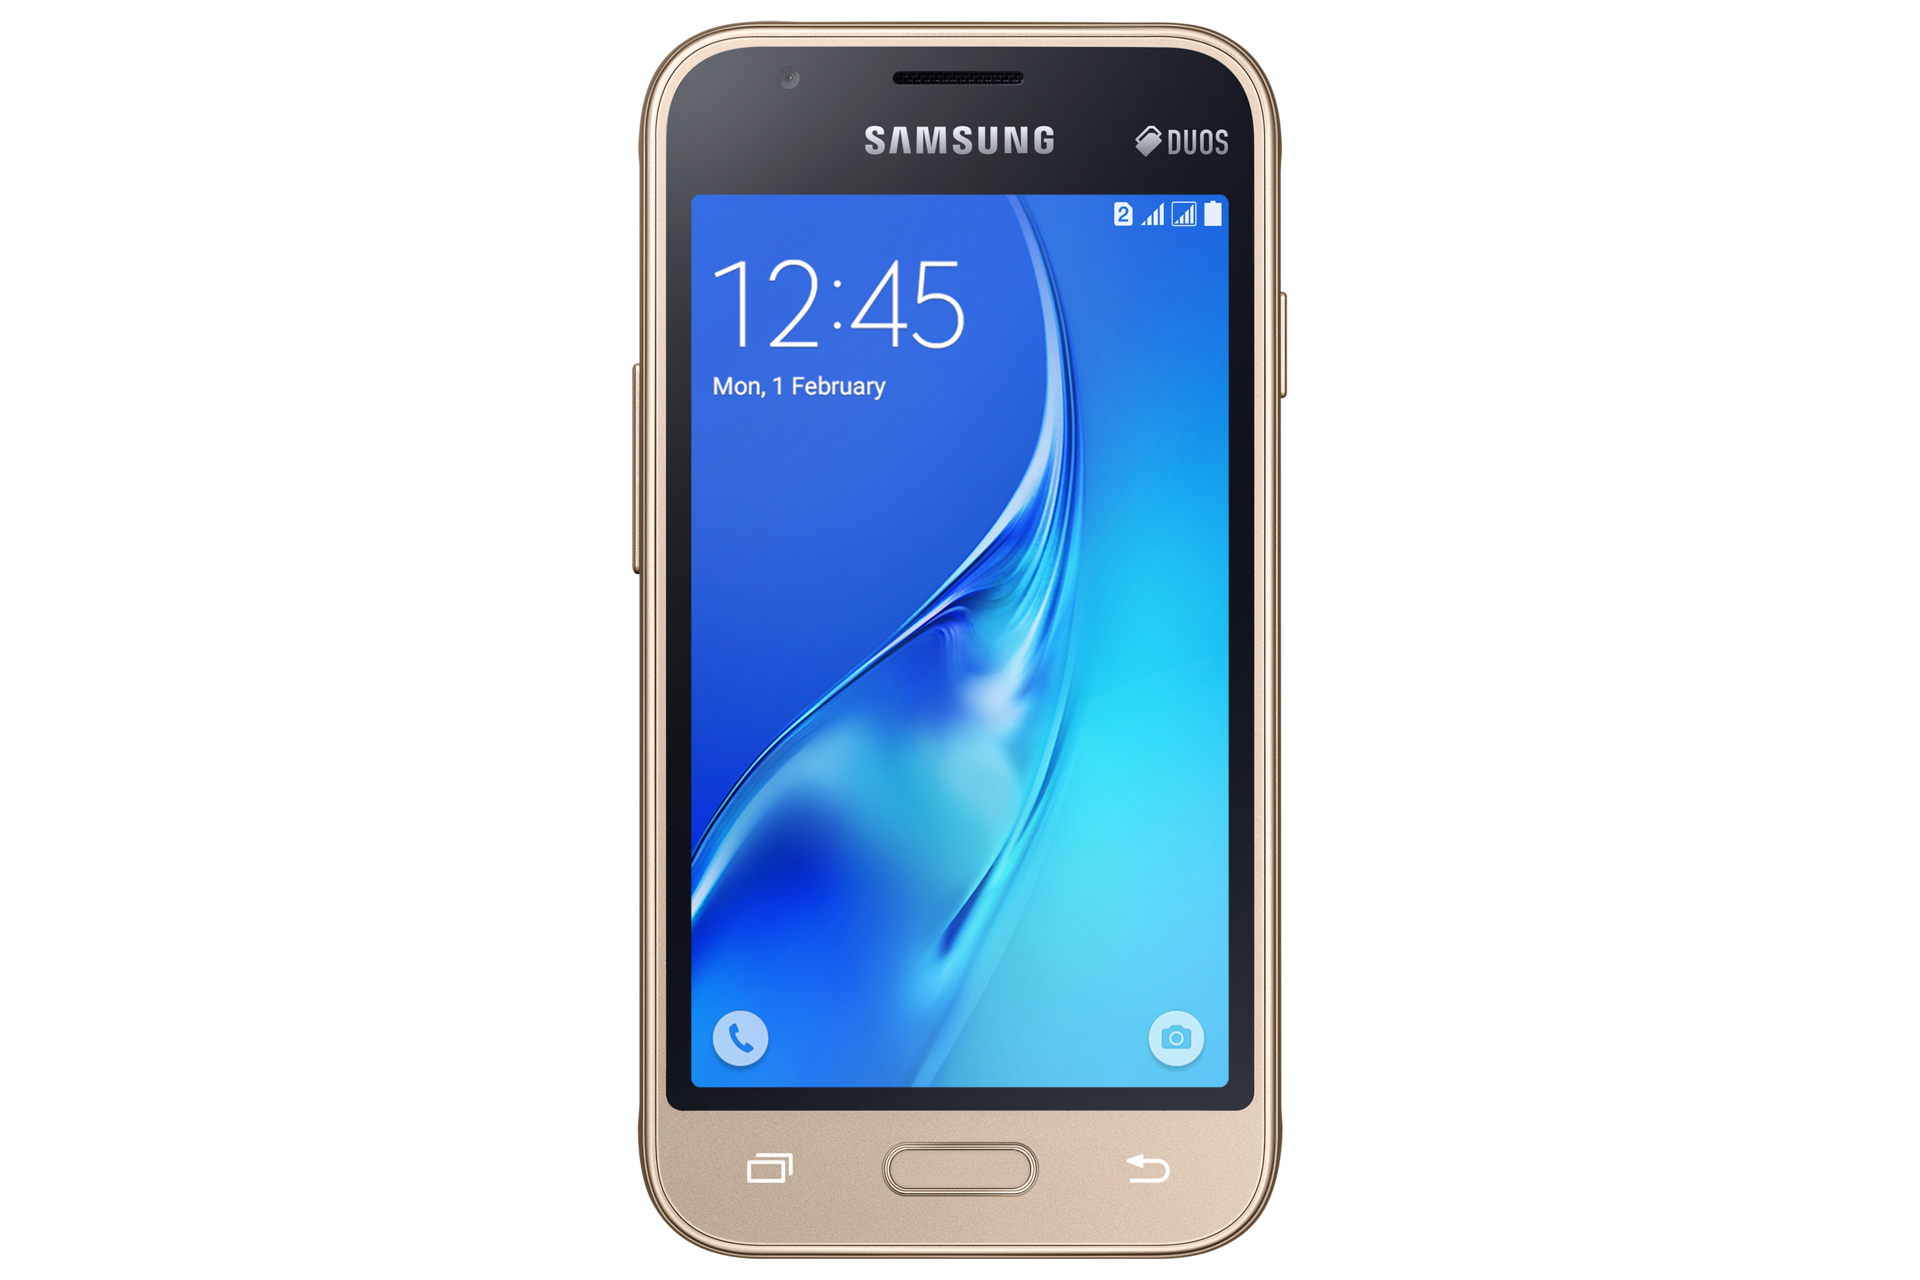 Samsung Galaxy J1 Mini (2016) Harga dan Spesifikasi